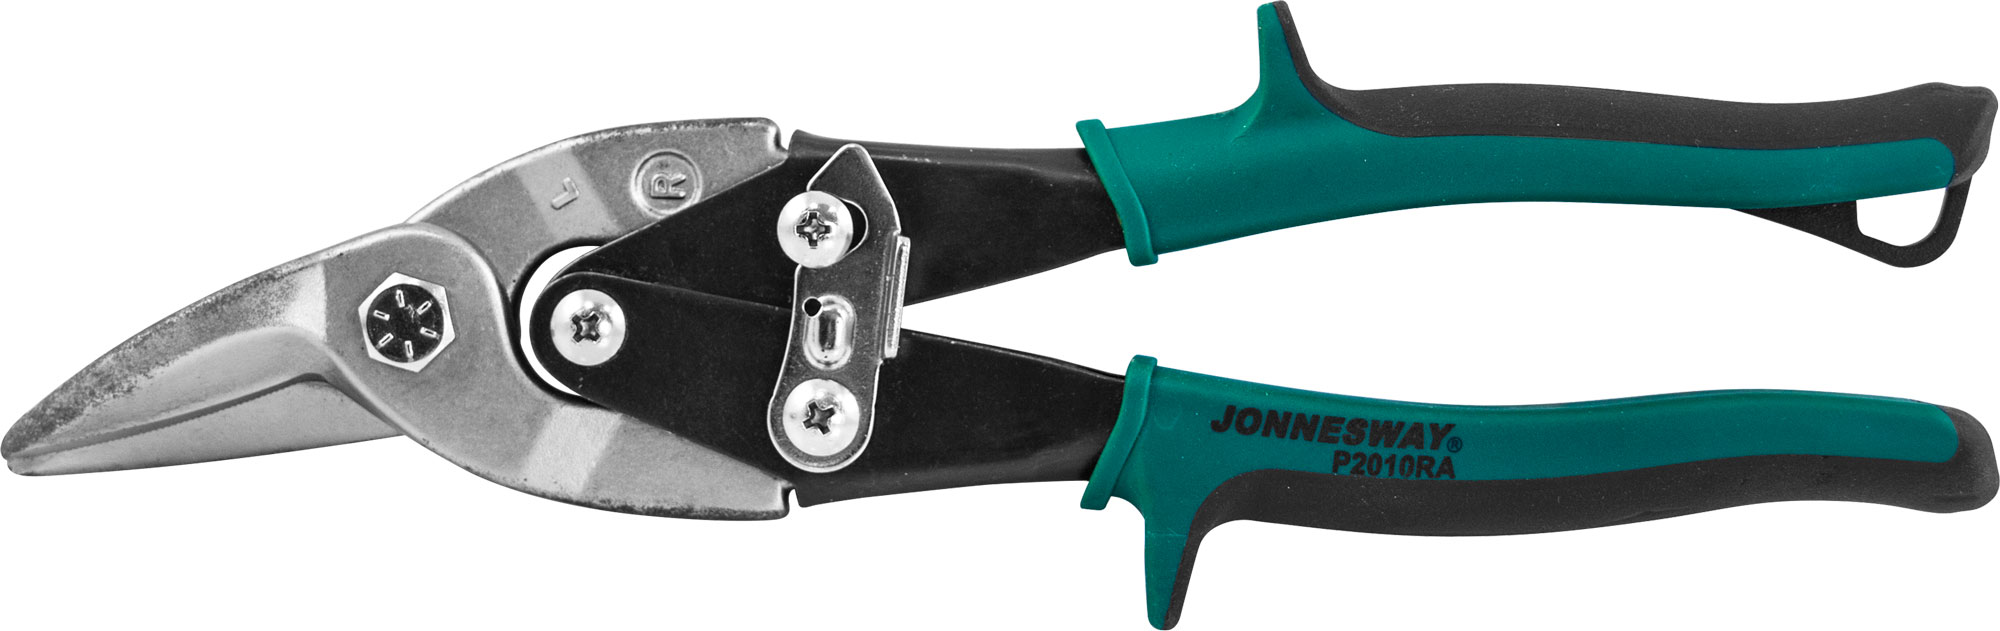 Ножницы по металлу правого реза 250 мм Jonnesway P2010RA фото